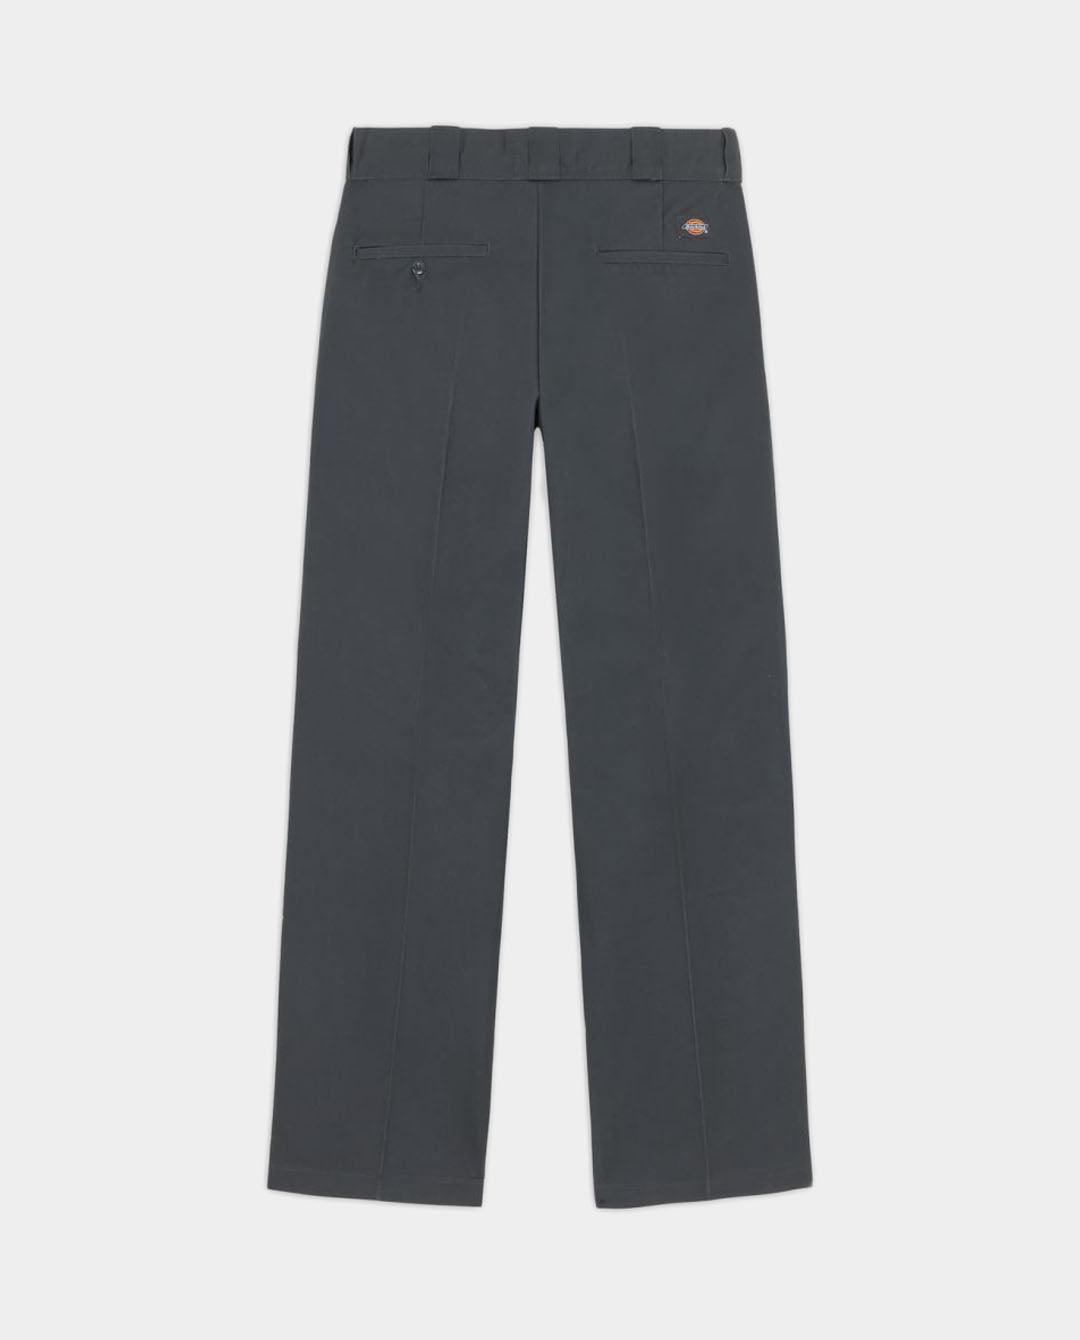 Dickies - 874 Original Fit Work Pants - Charcoal Pants Dickies   